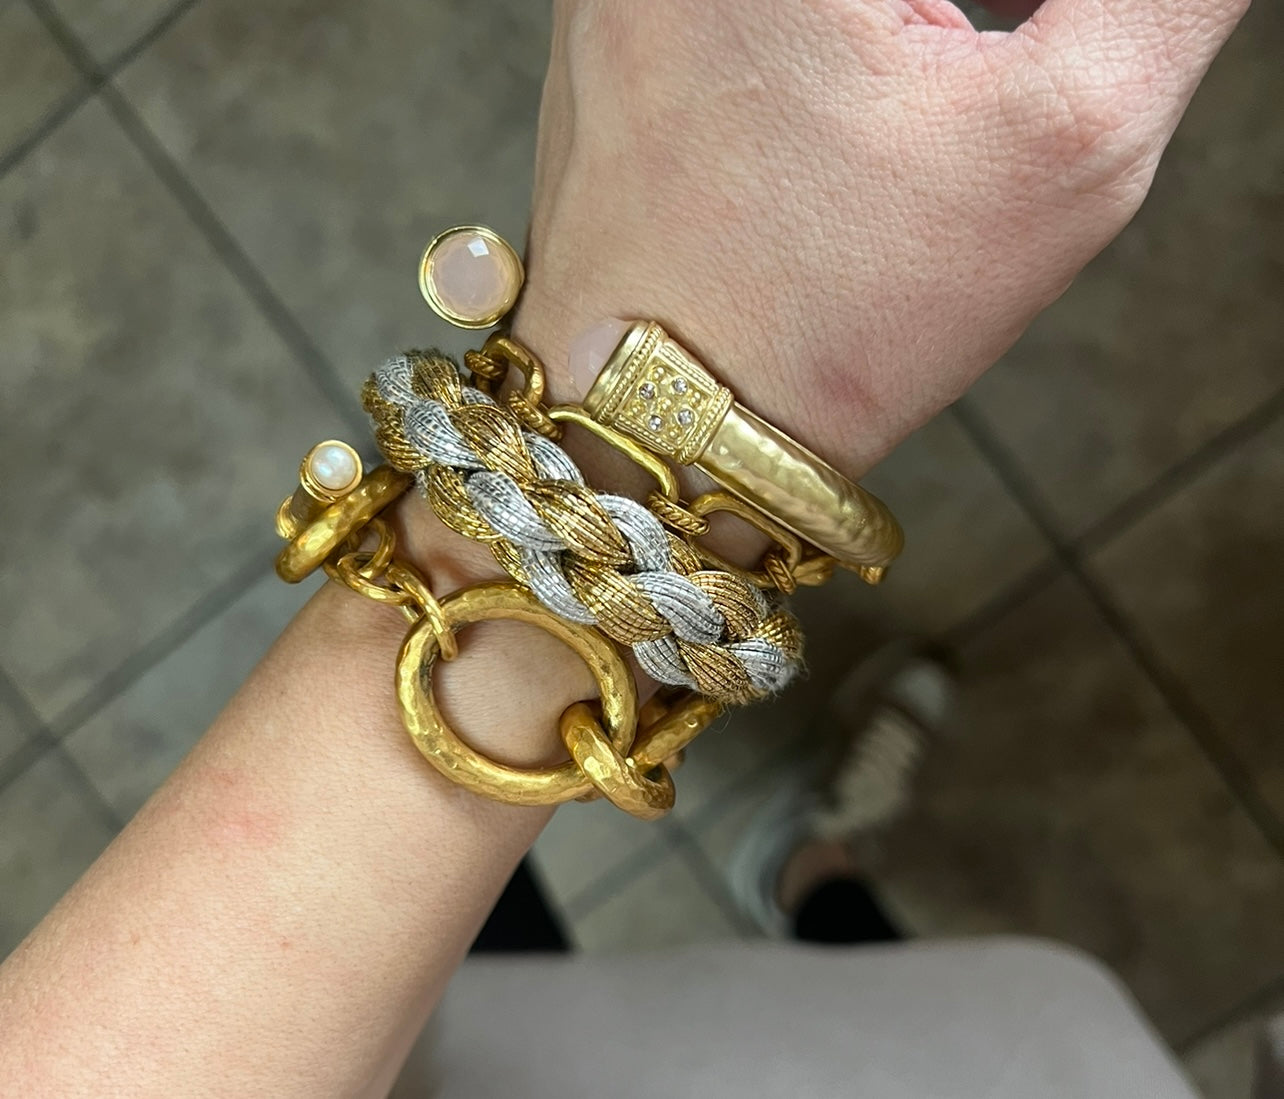 Hand Made Braided Bracelet (Multiple Colors!)